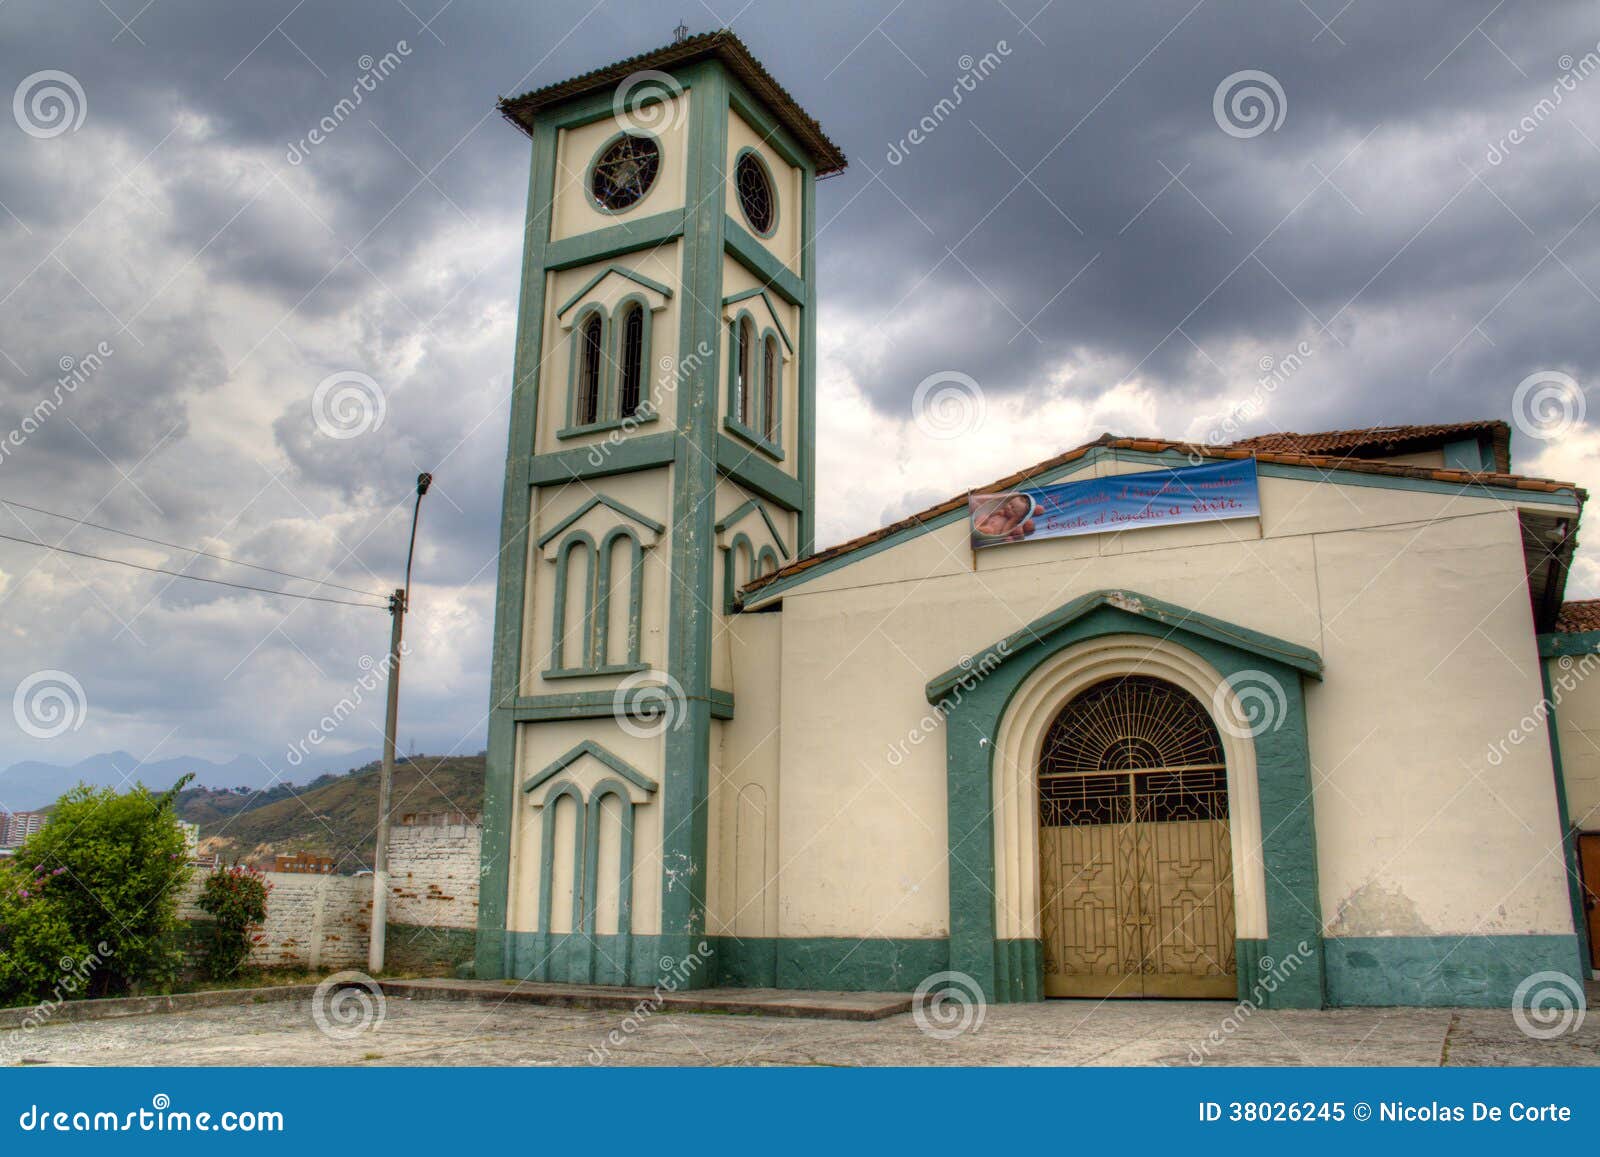 small church in cali